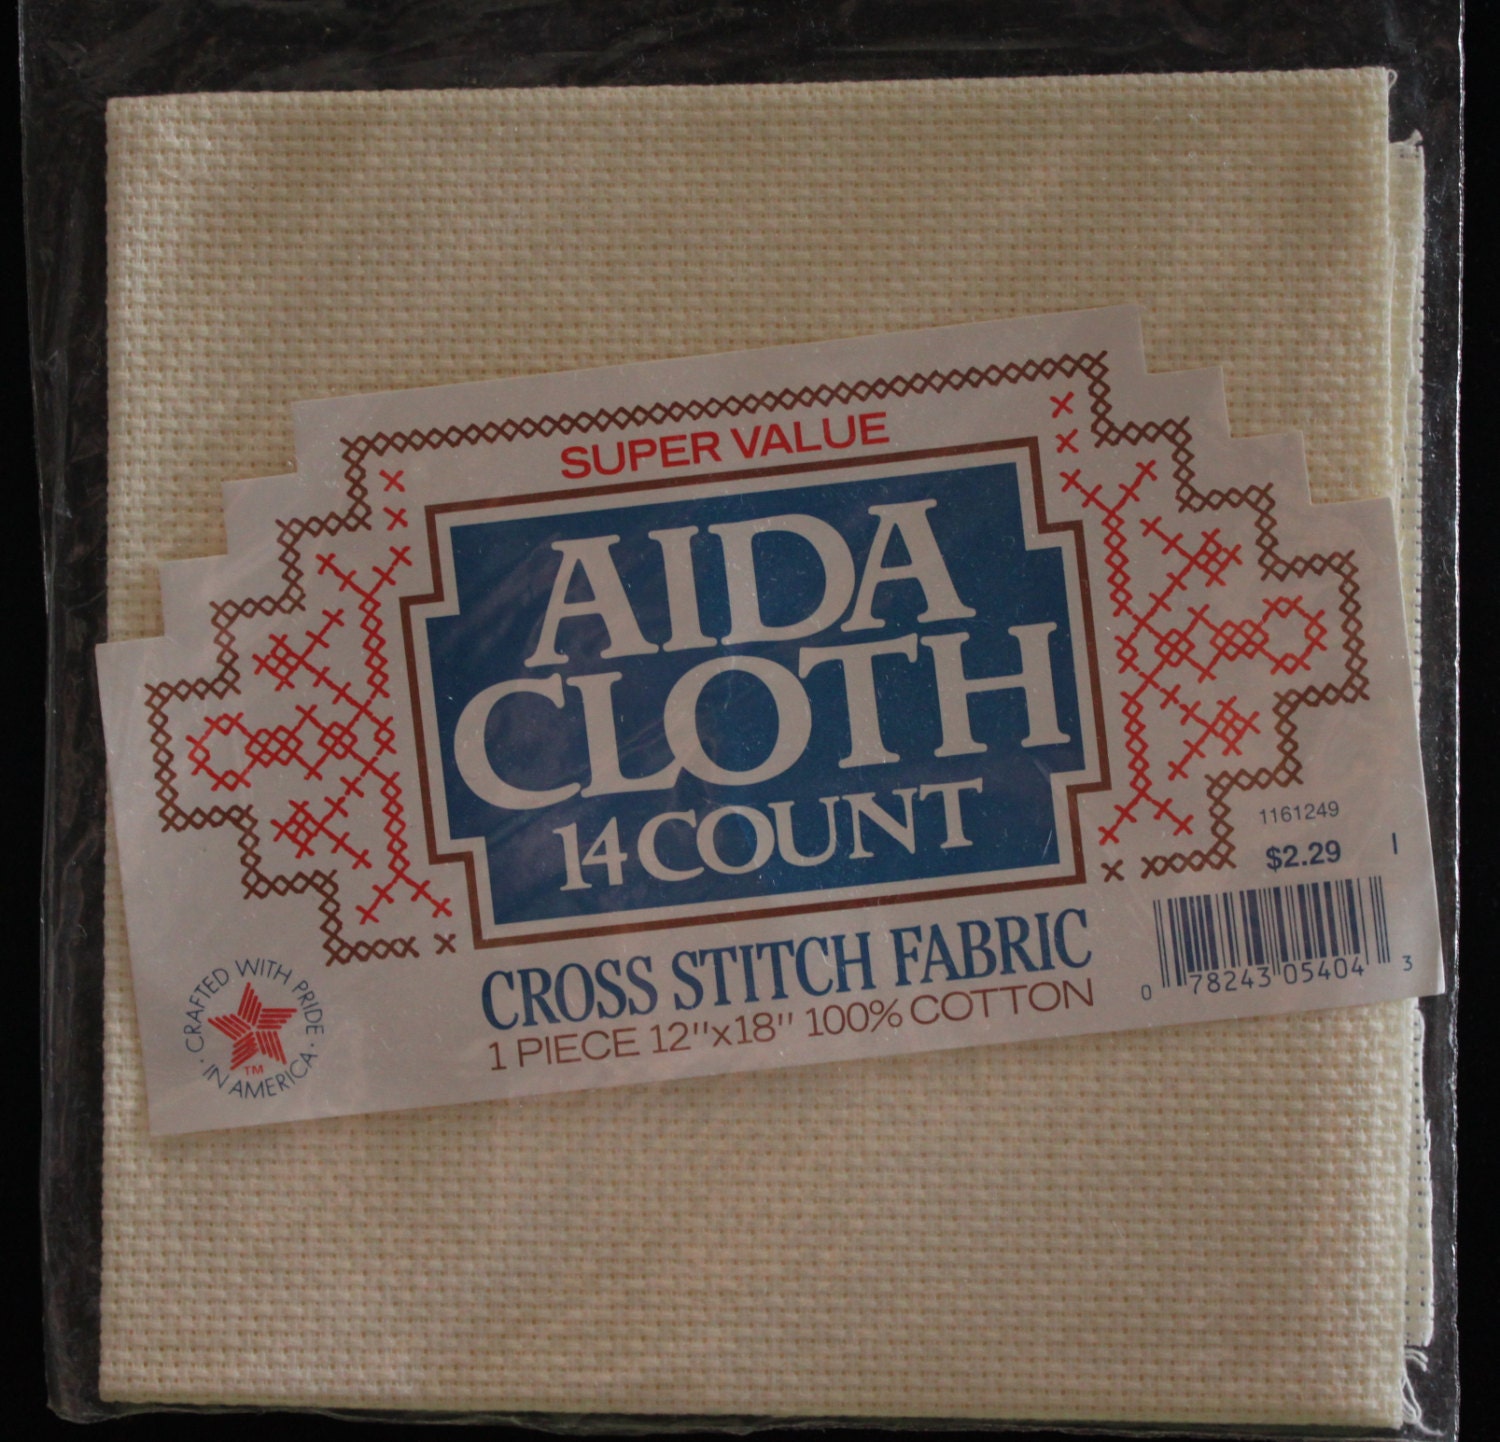 18 count aida cloth